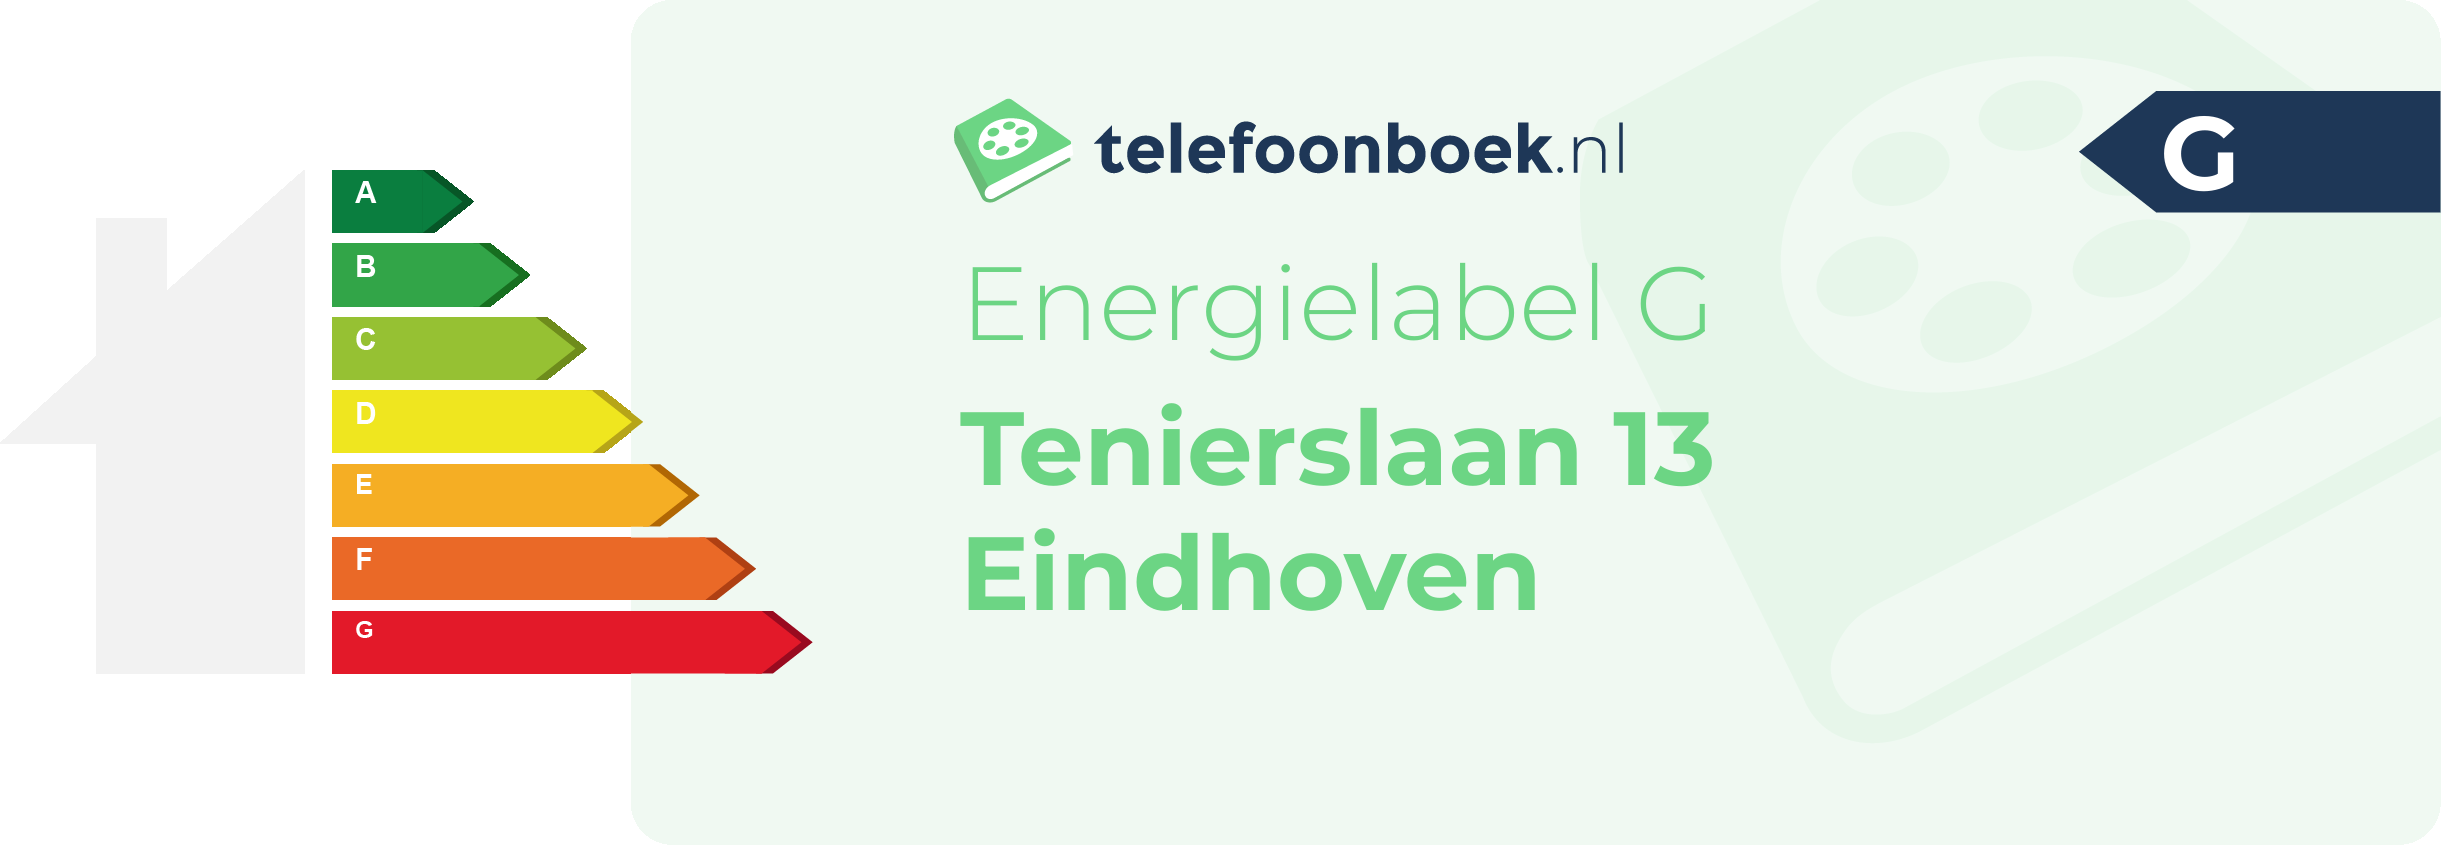 Energielabel Tenierslaan 13 Eindhoven